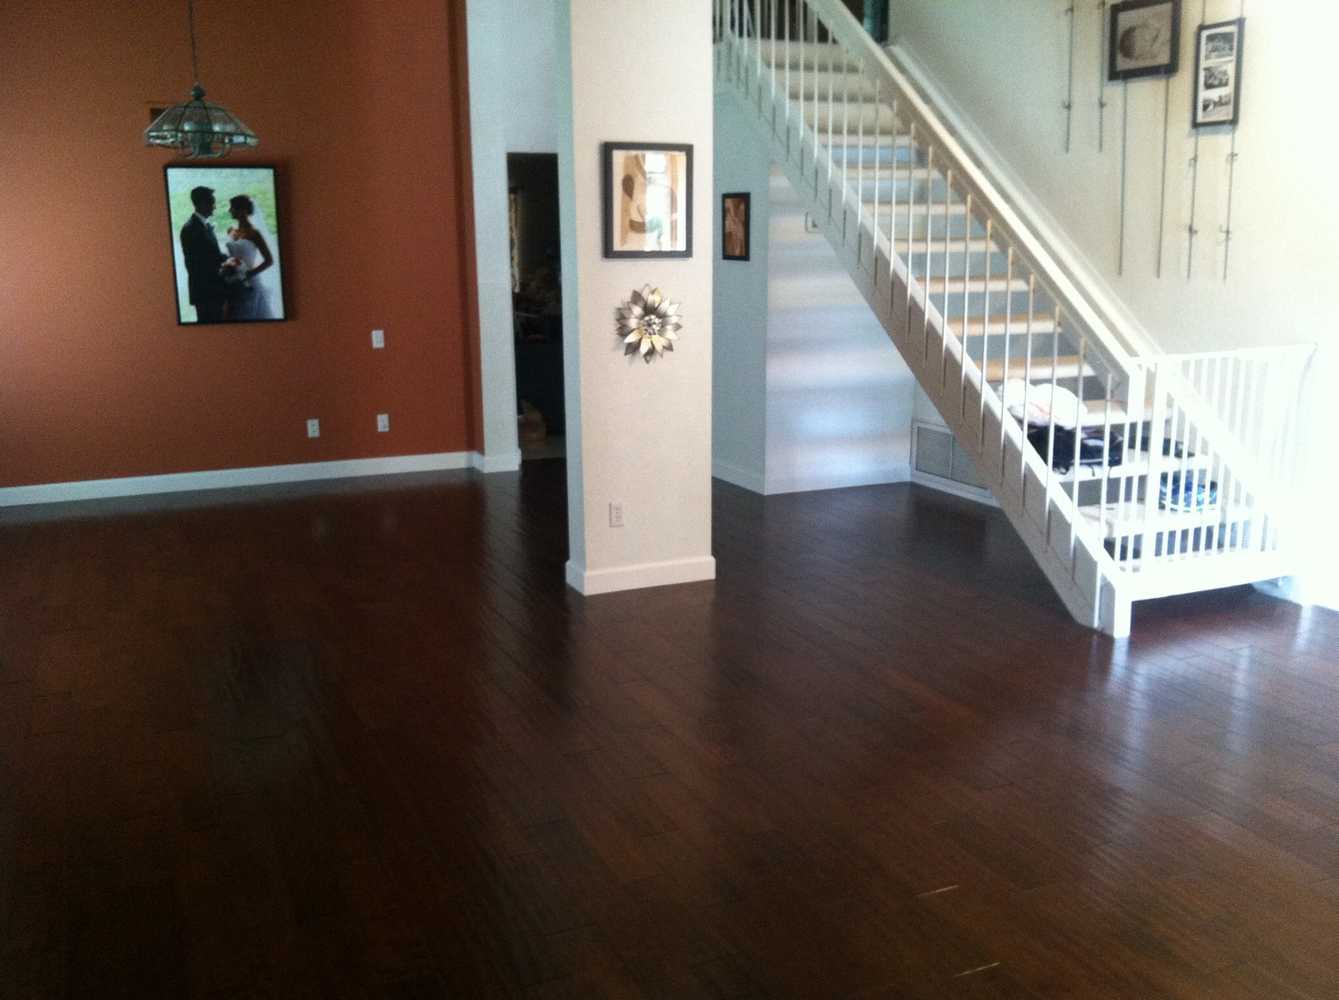 Wood floors by T&G Flooring